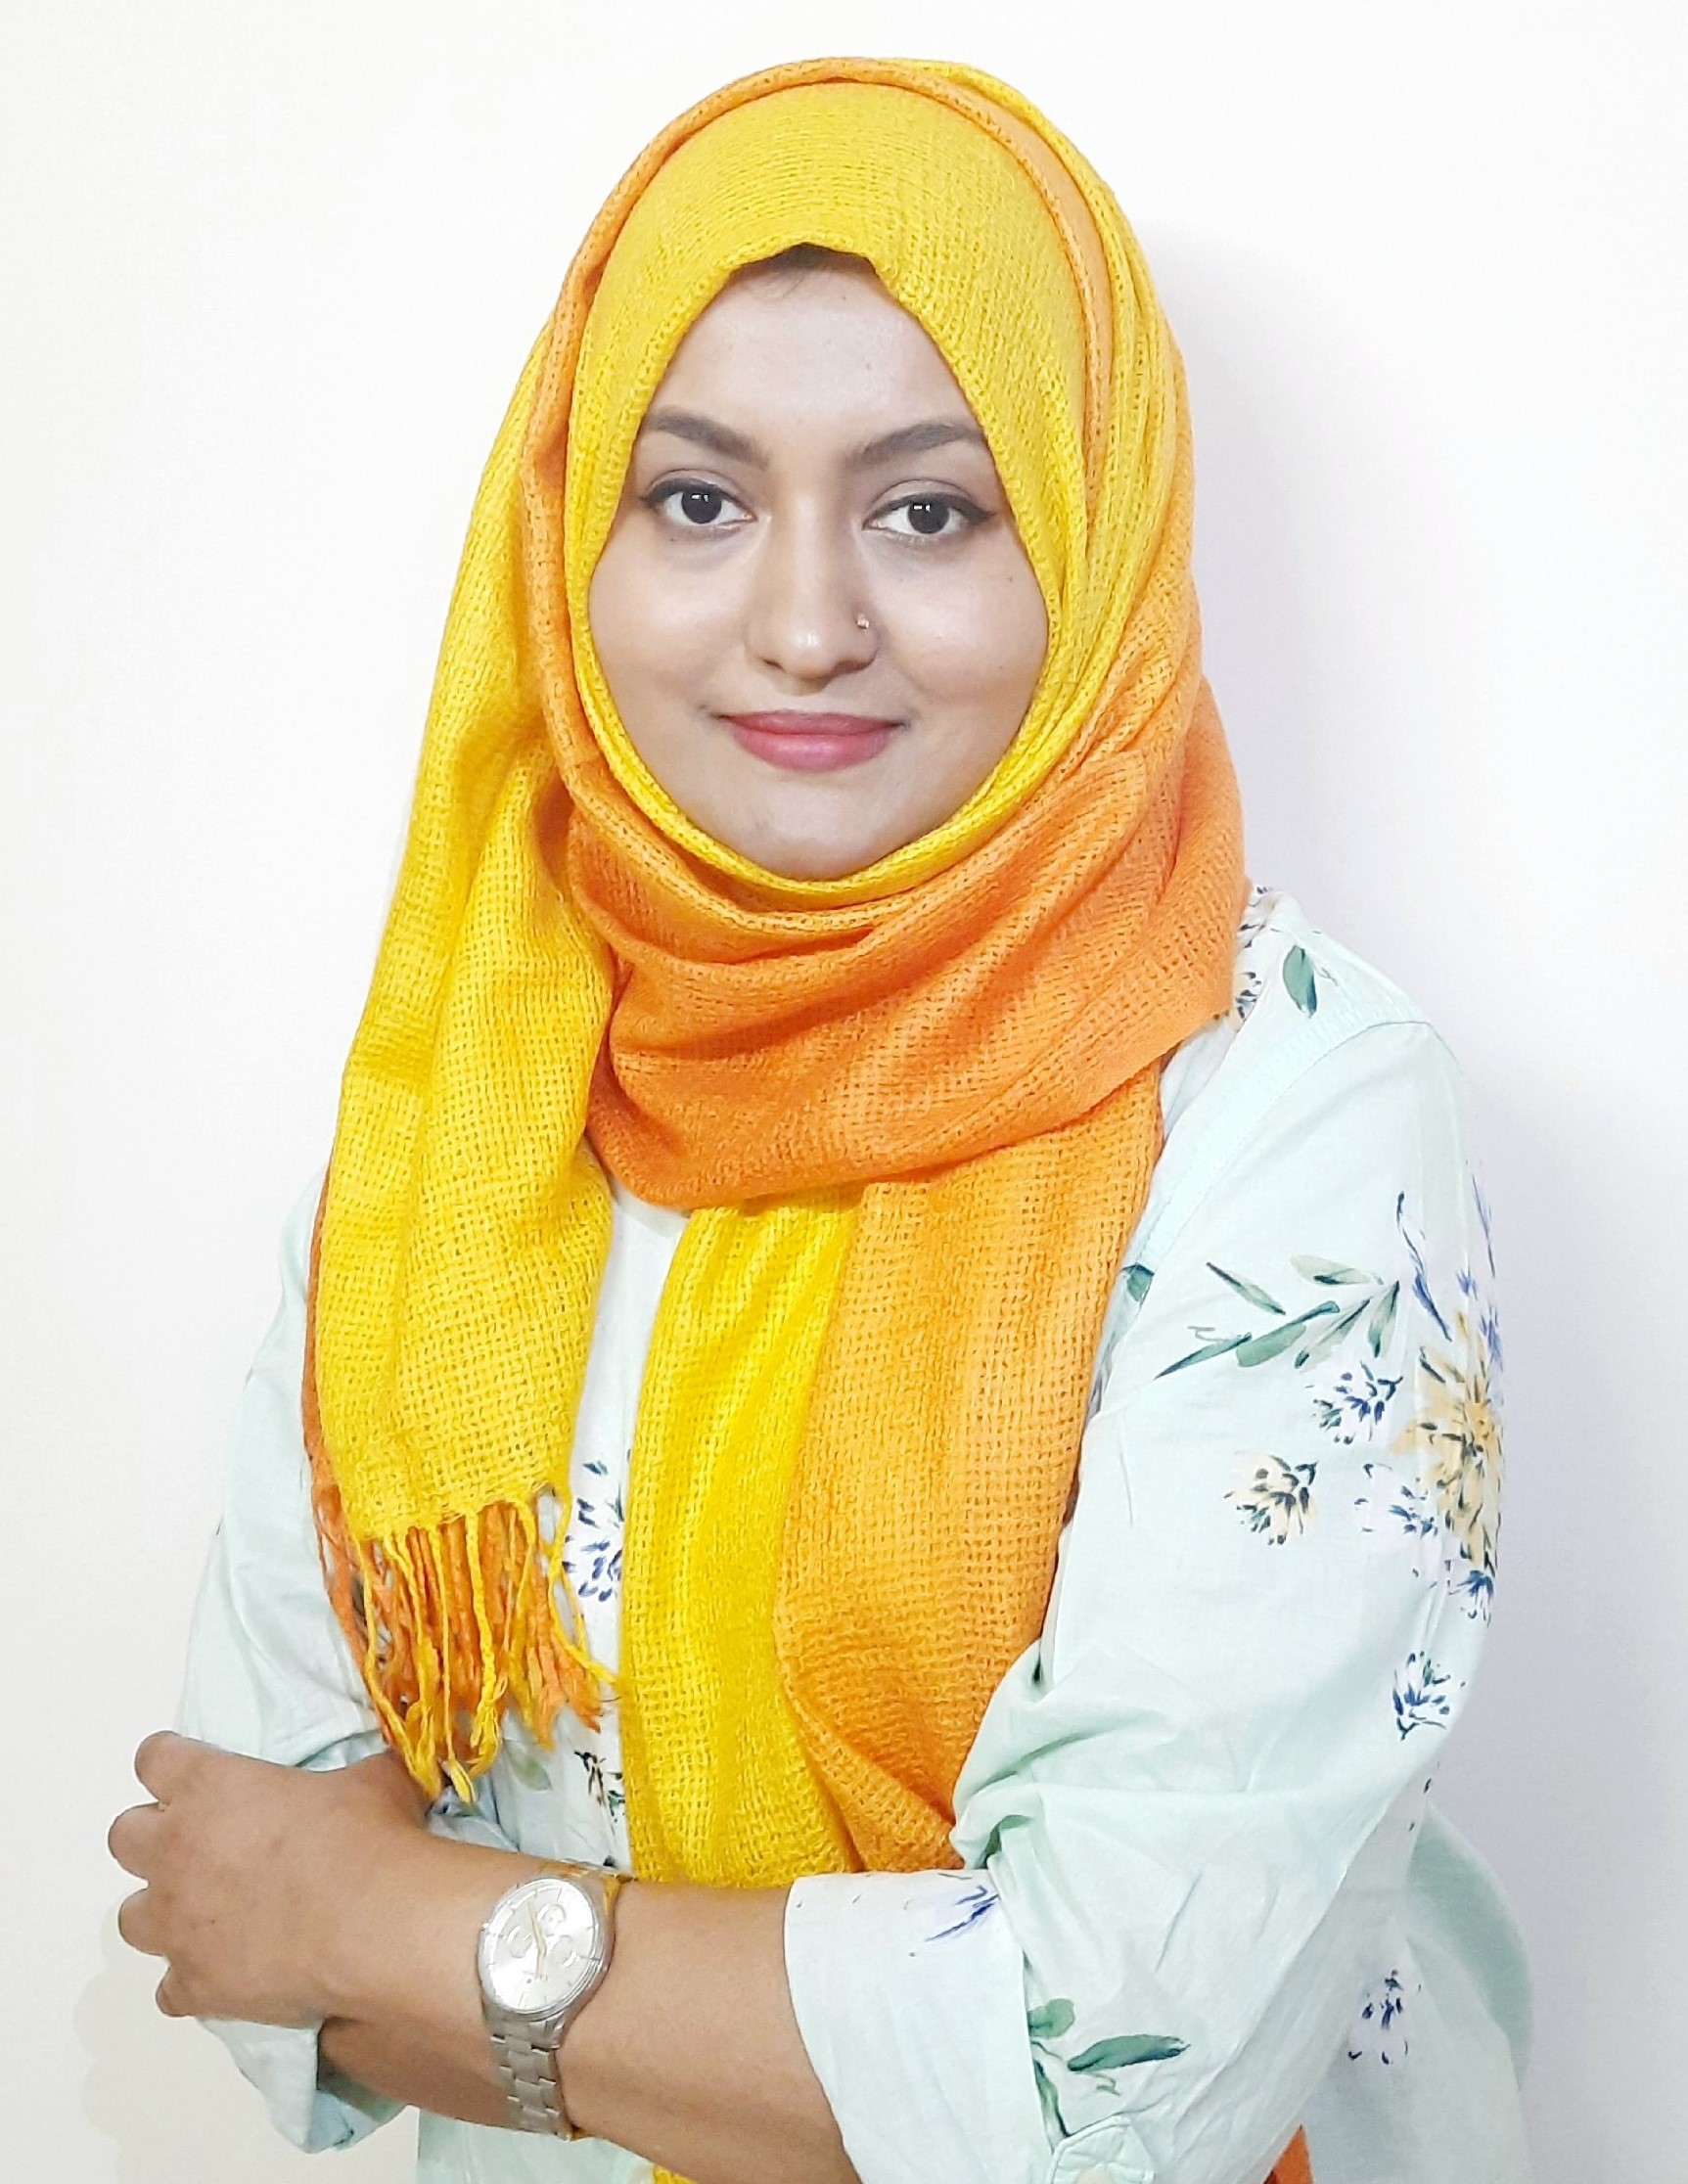 Sultana Razia, Ph.D.